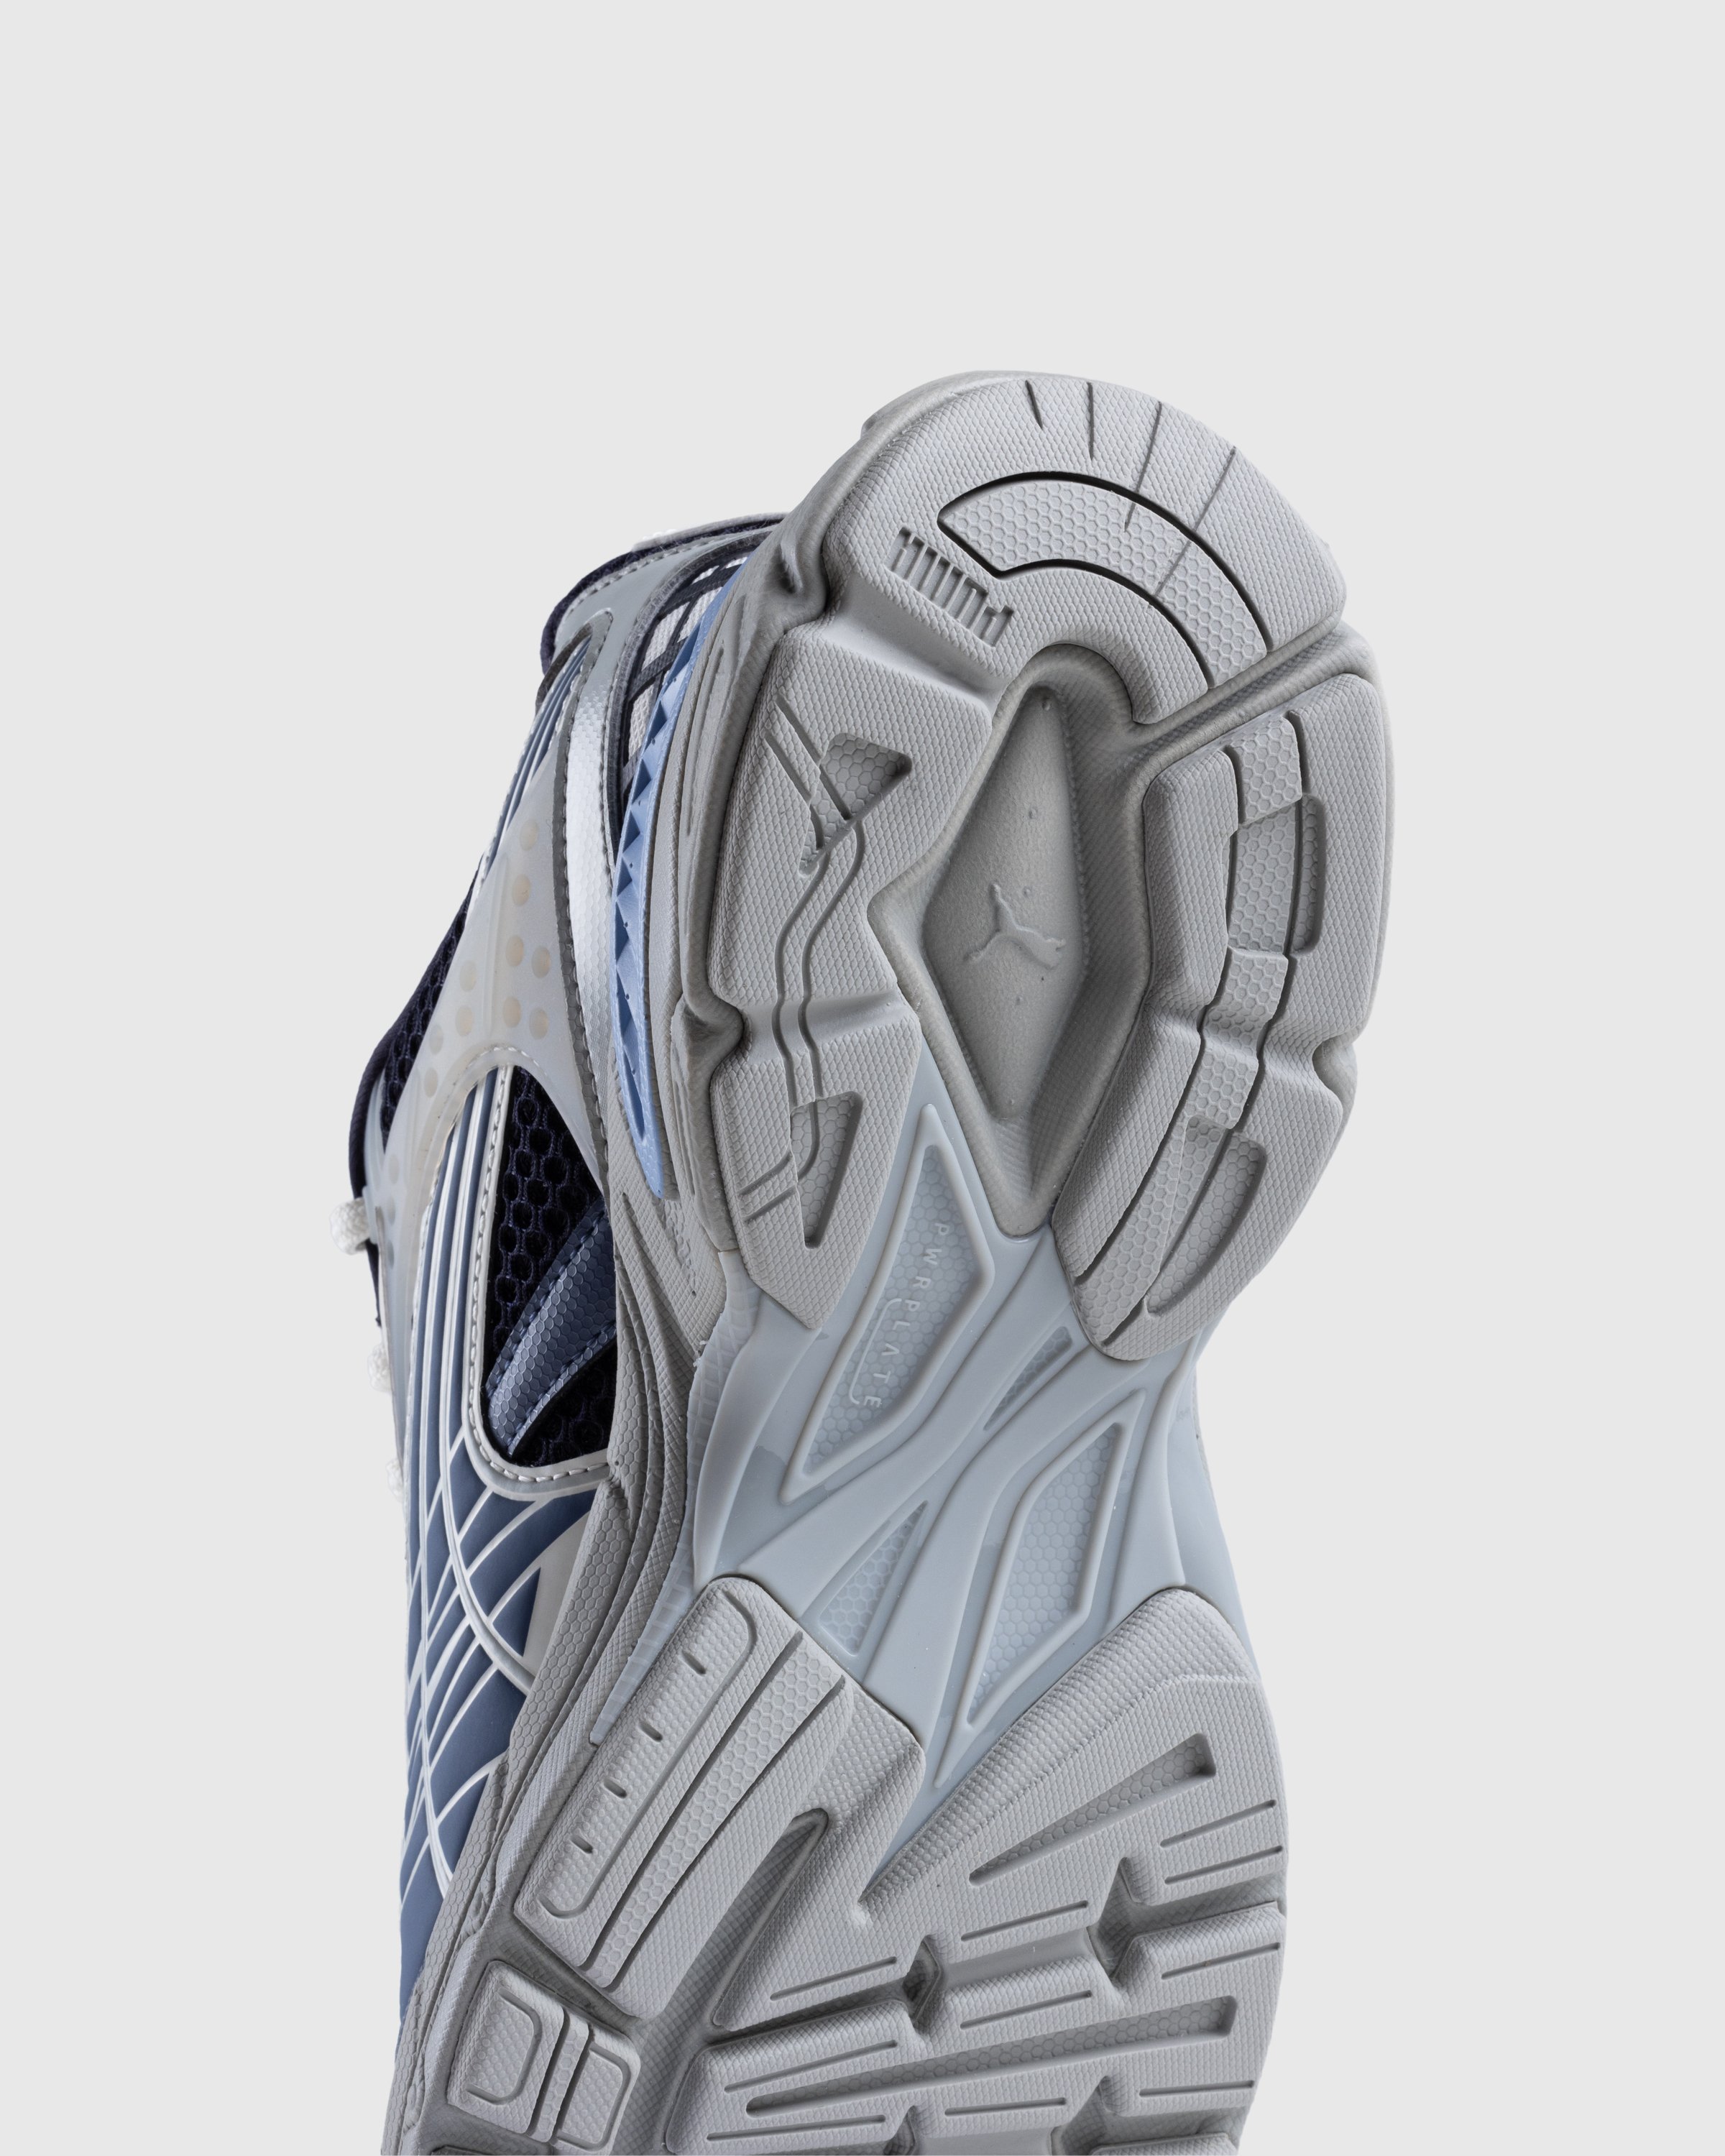 Puma - Velophasis Phased White/Blue - Footwear - Multi - Image 6